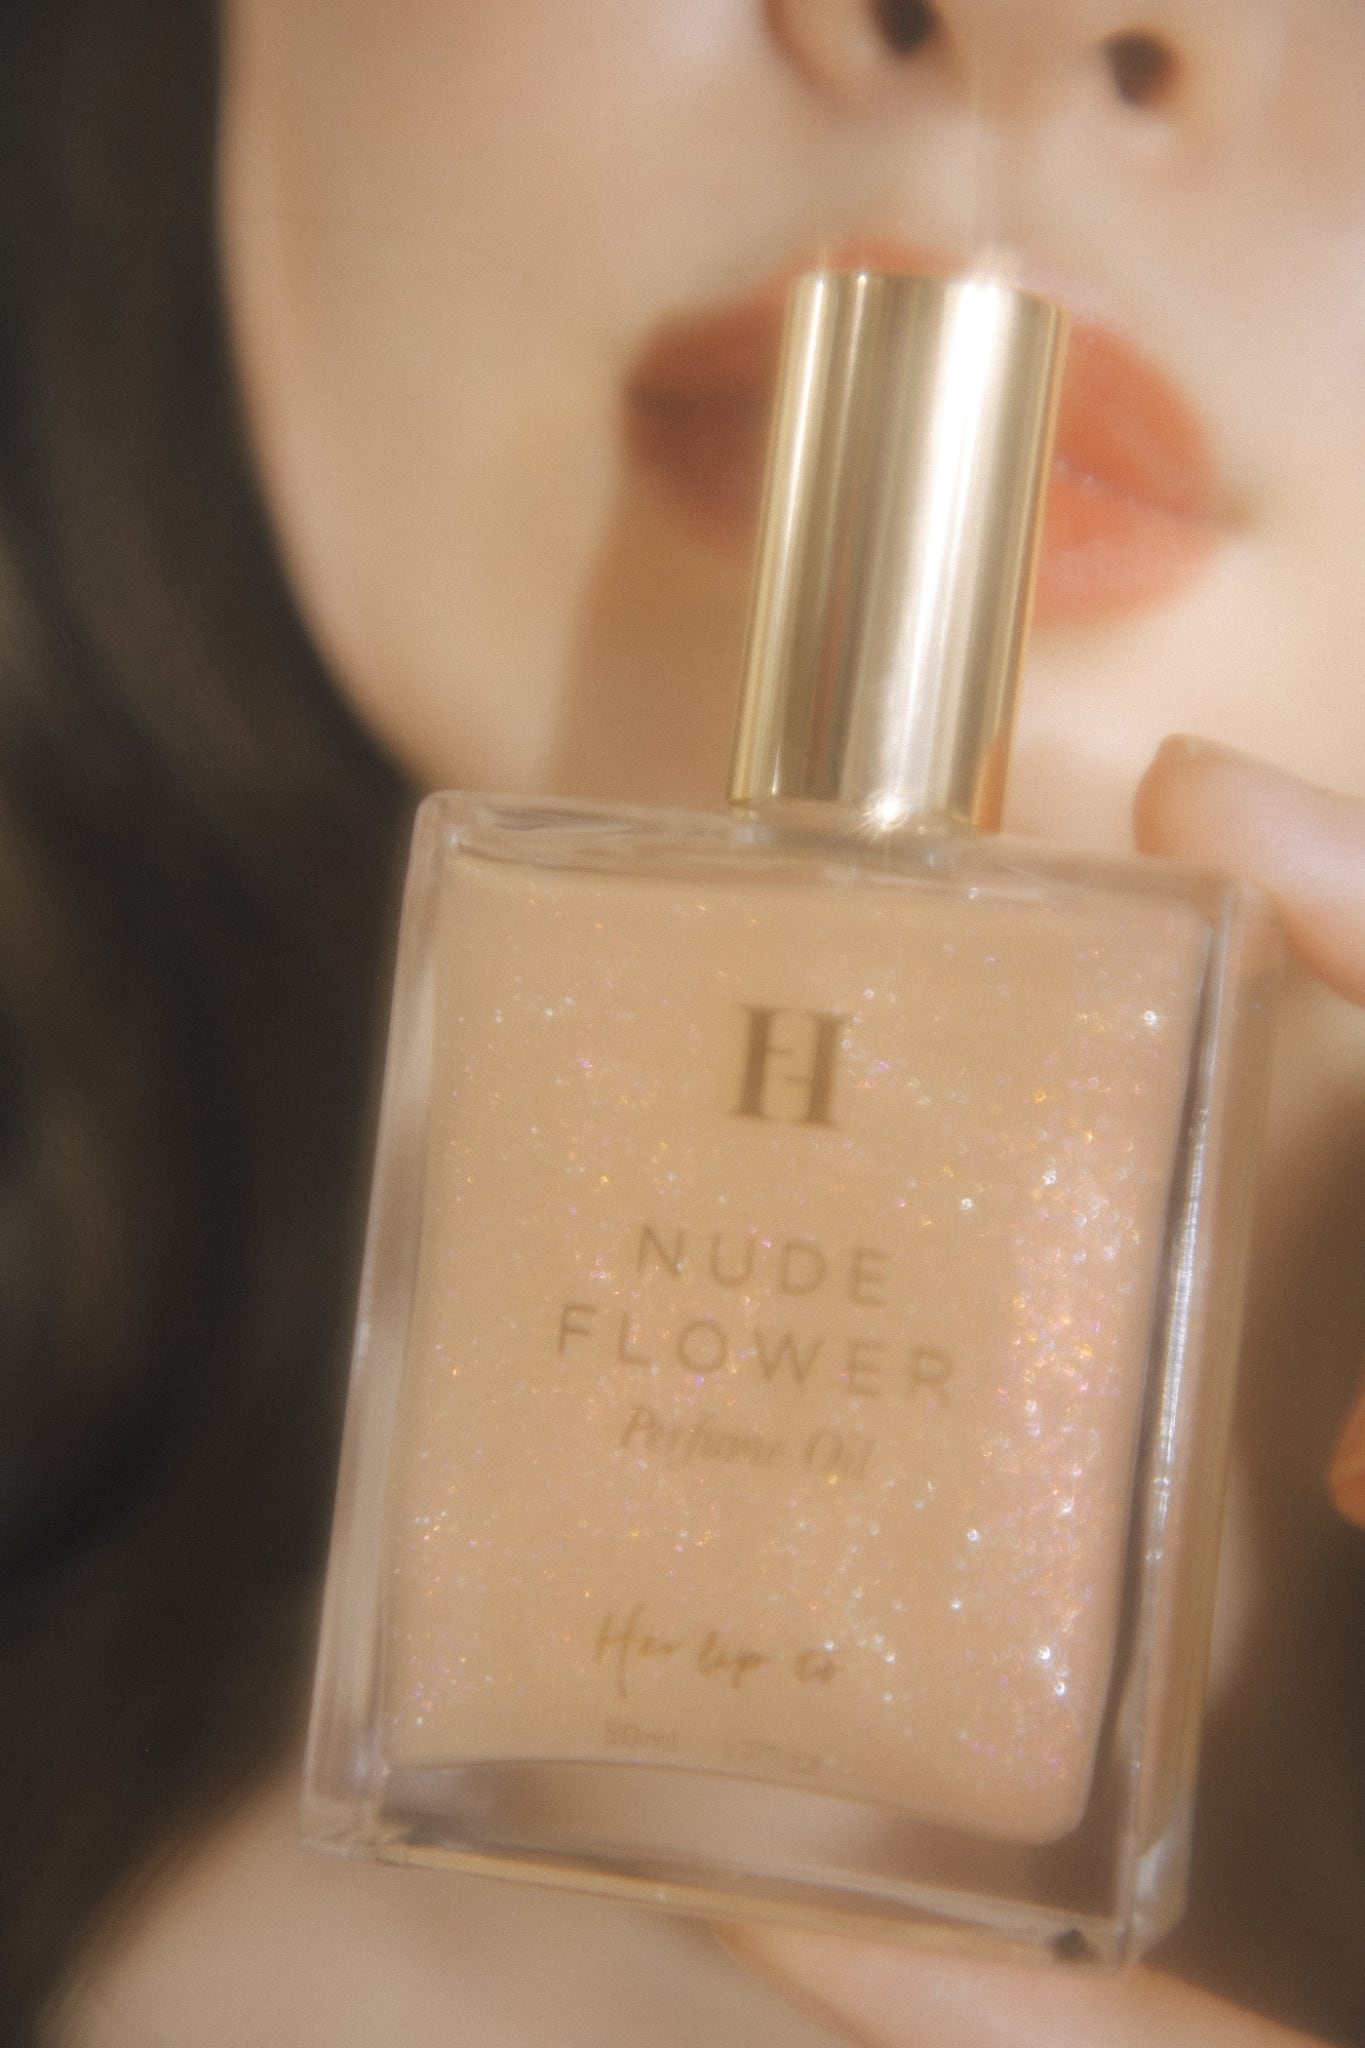 ★Her lip to NUDE  FLOWER perfume oil 未使用